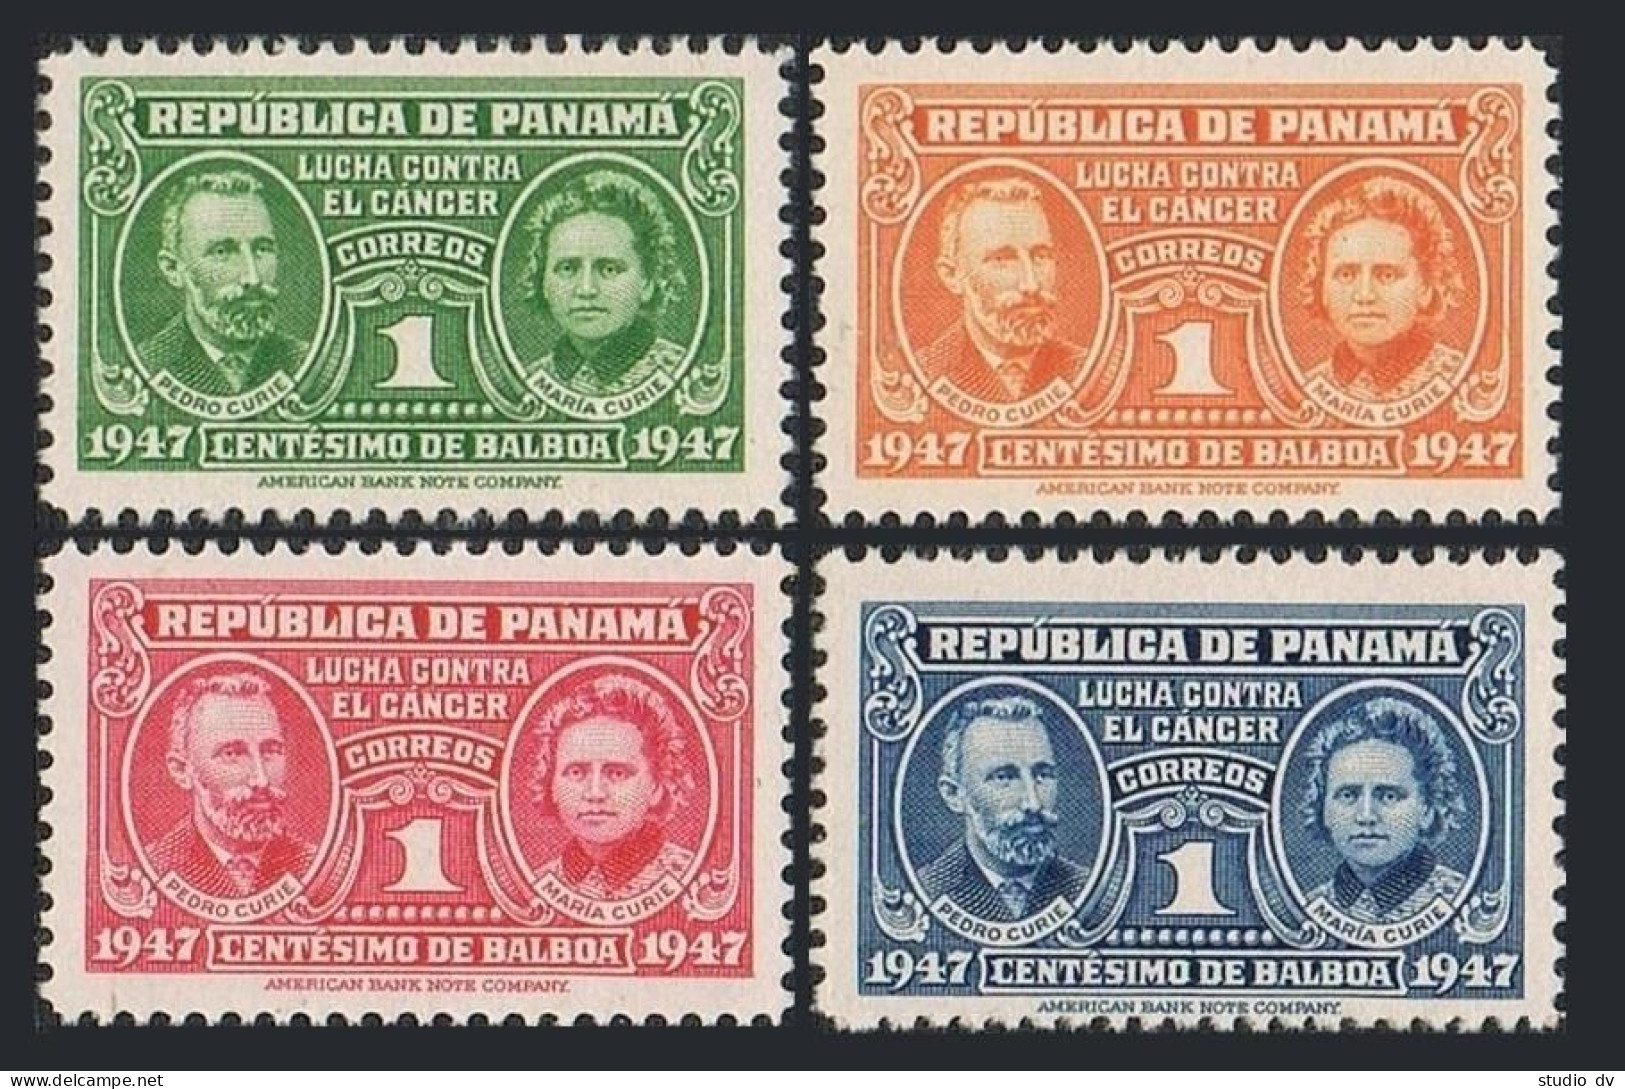 Panama RA24-RA27, MNH. Mi Zw 24-27. Postal Tax Stamps 1947. Pierre & Marie Curie - Panama